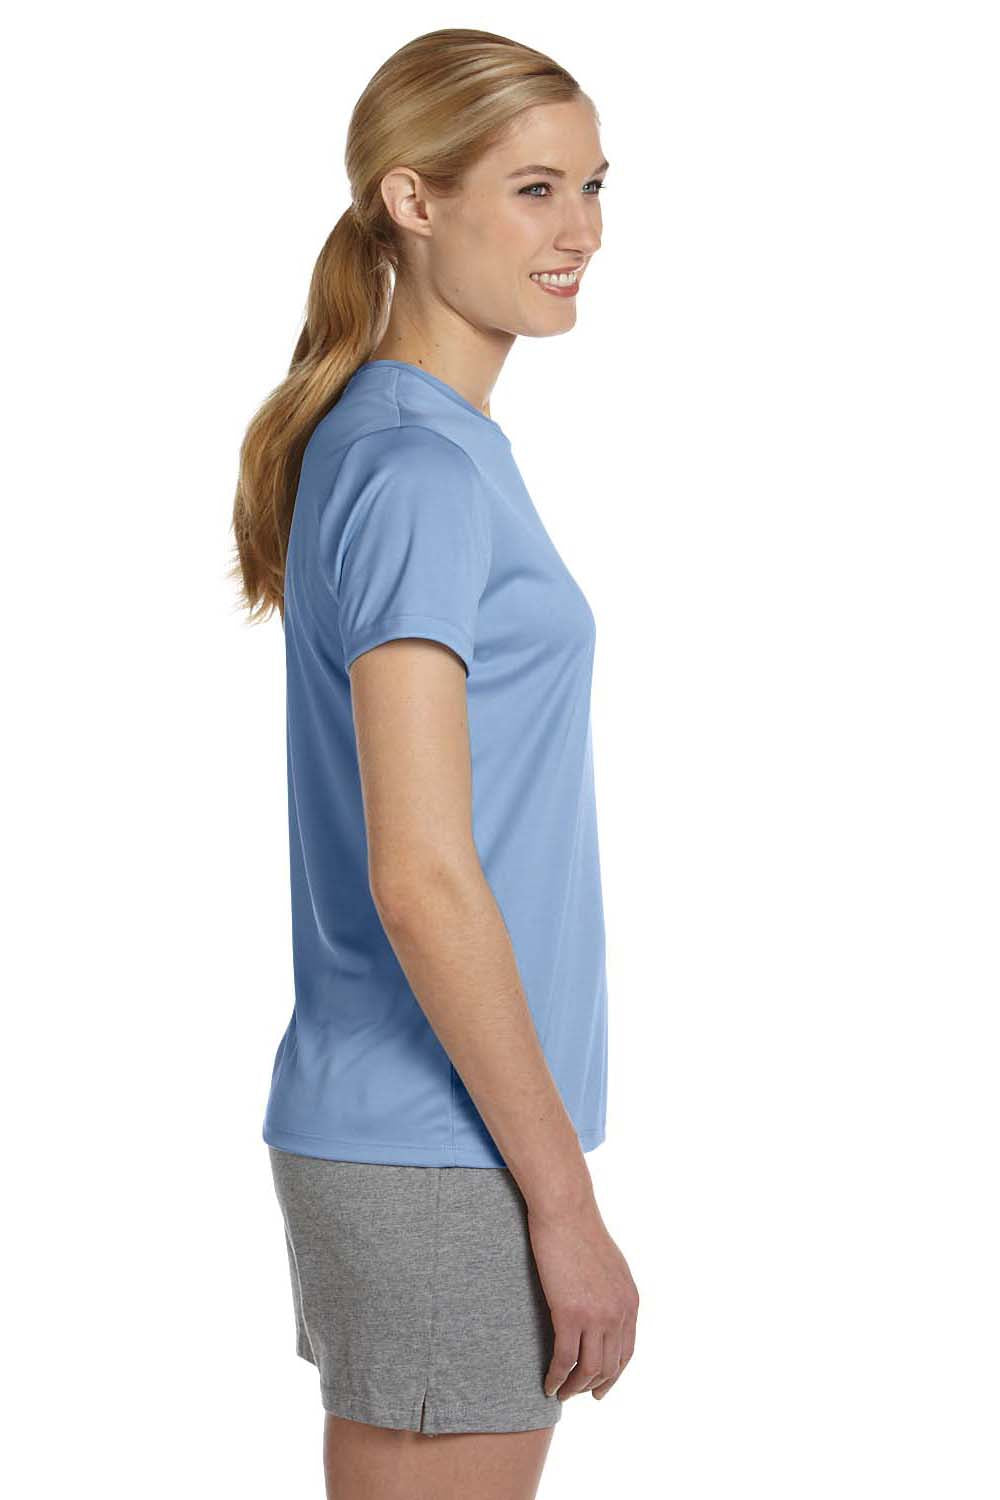 Hanes 4830 Womens Cool DRI FreshIQ Moisture Wicking Short Sleeve Crewneck T-Shirt Light Blue Side